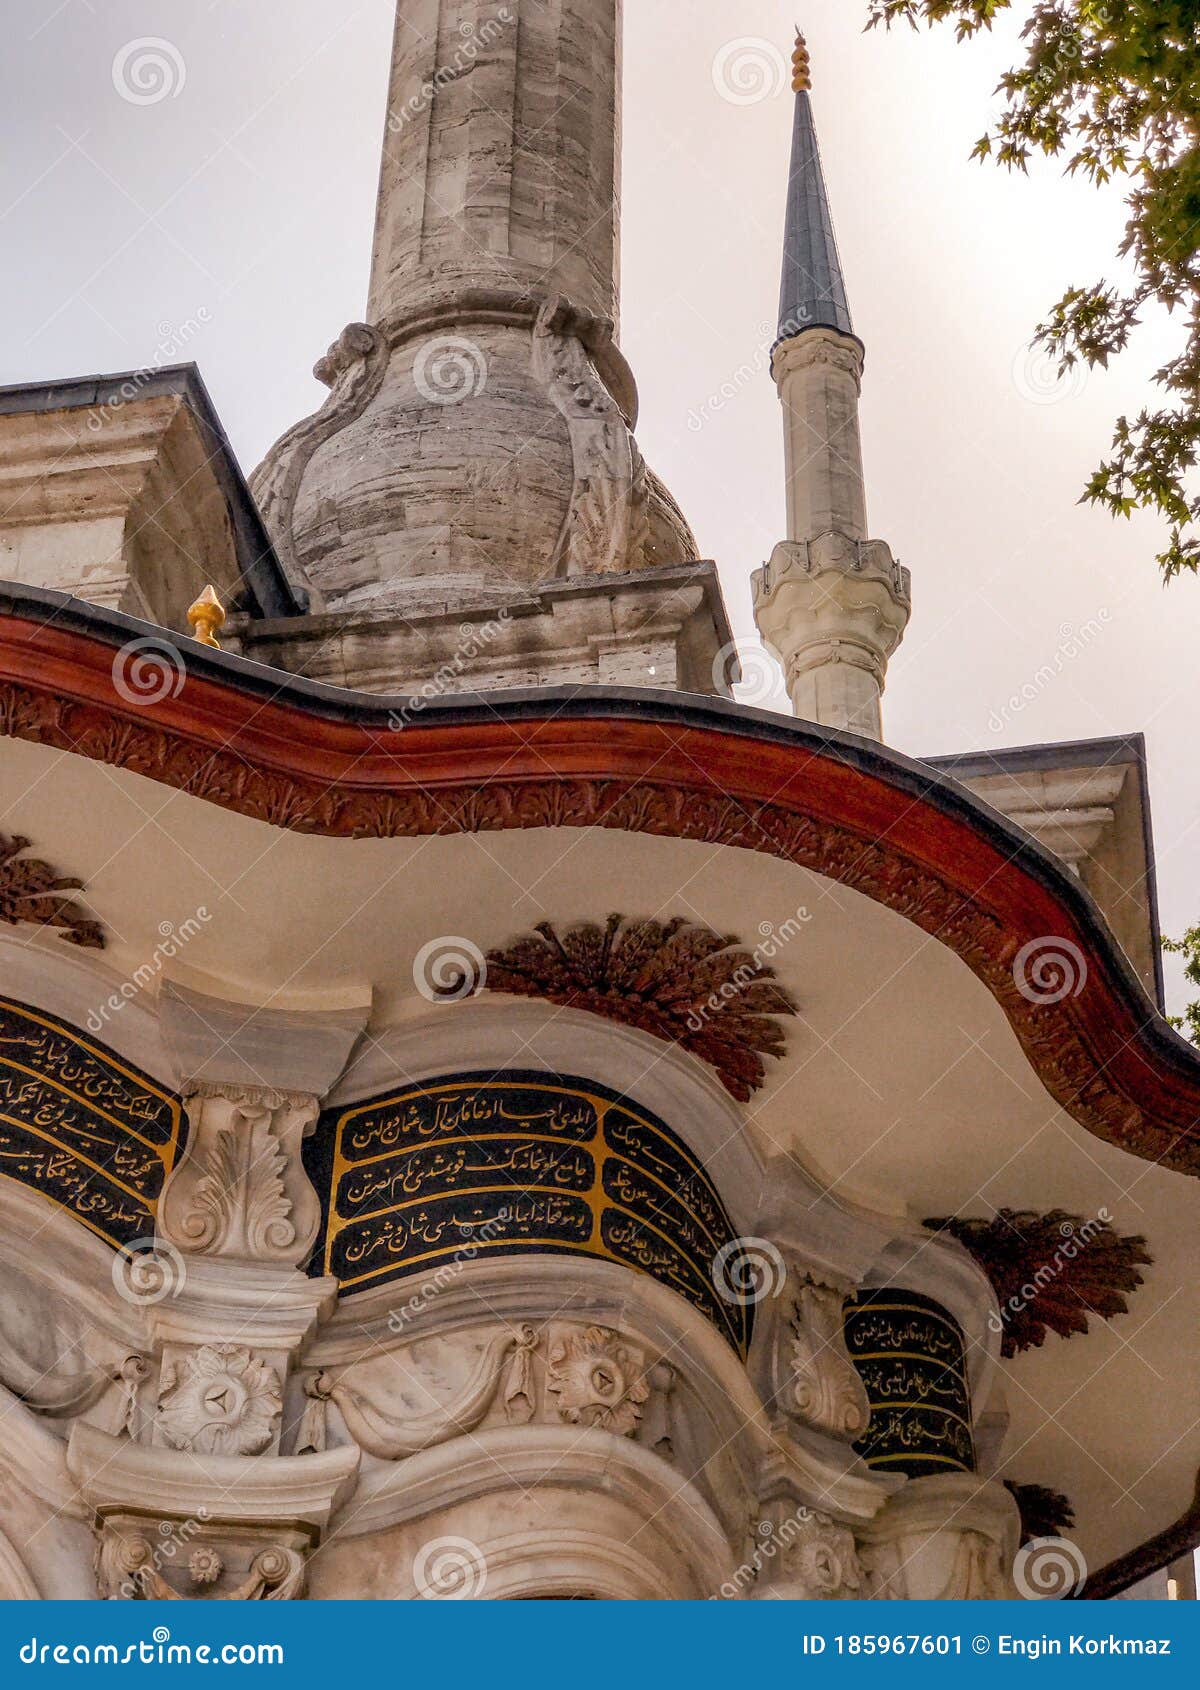 nusretiye mosque in istanbul, turkey